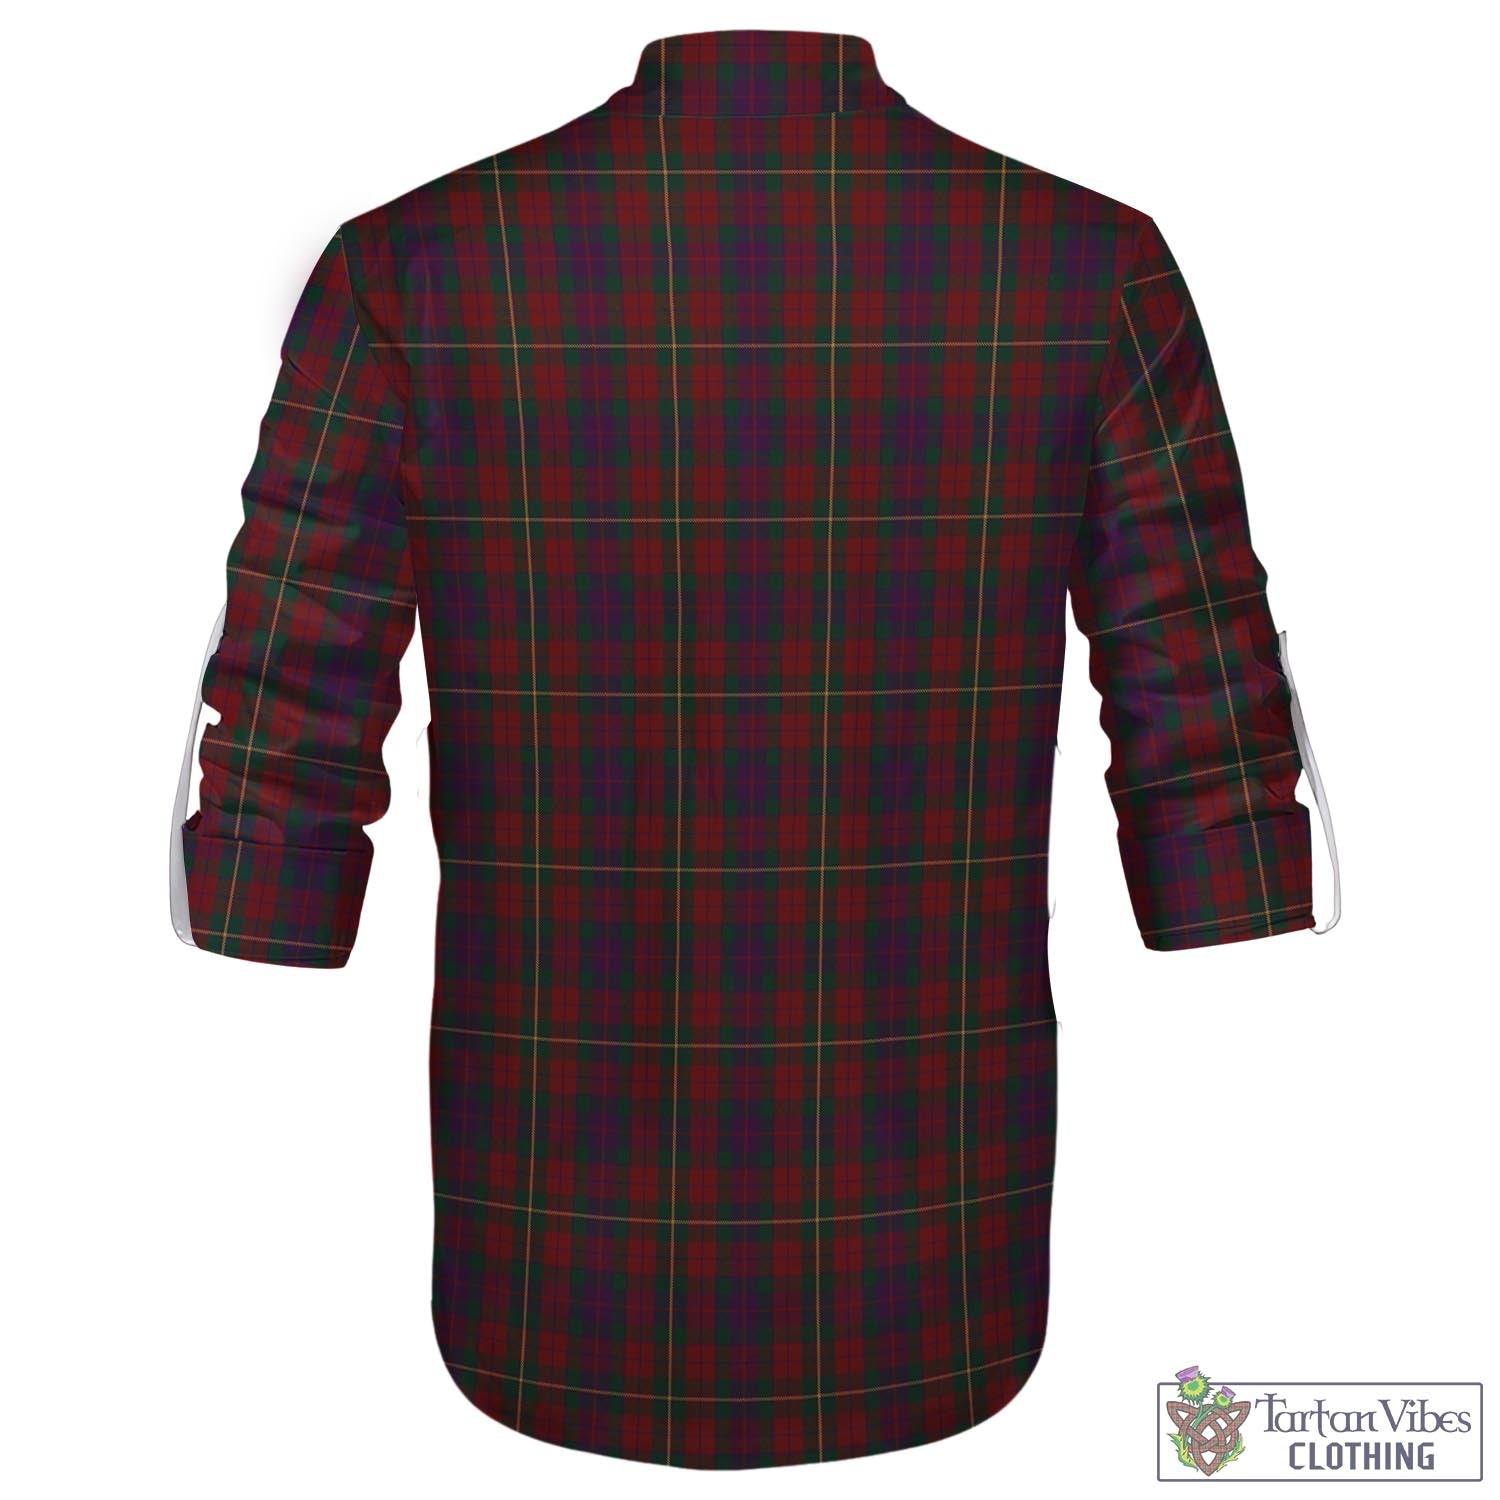 Tartan Vibes Clothing Clare County Ireland Tartan Men's Scottish Traditional Jacobite Ghillie Kilt Shirt